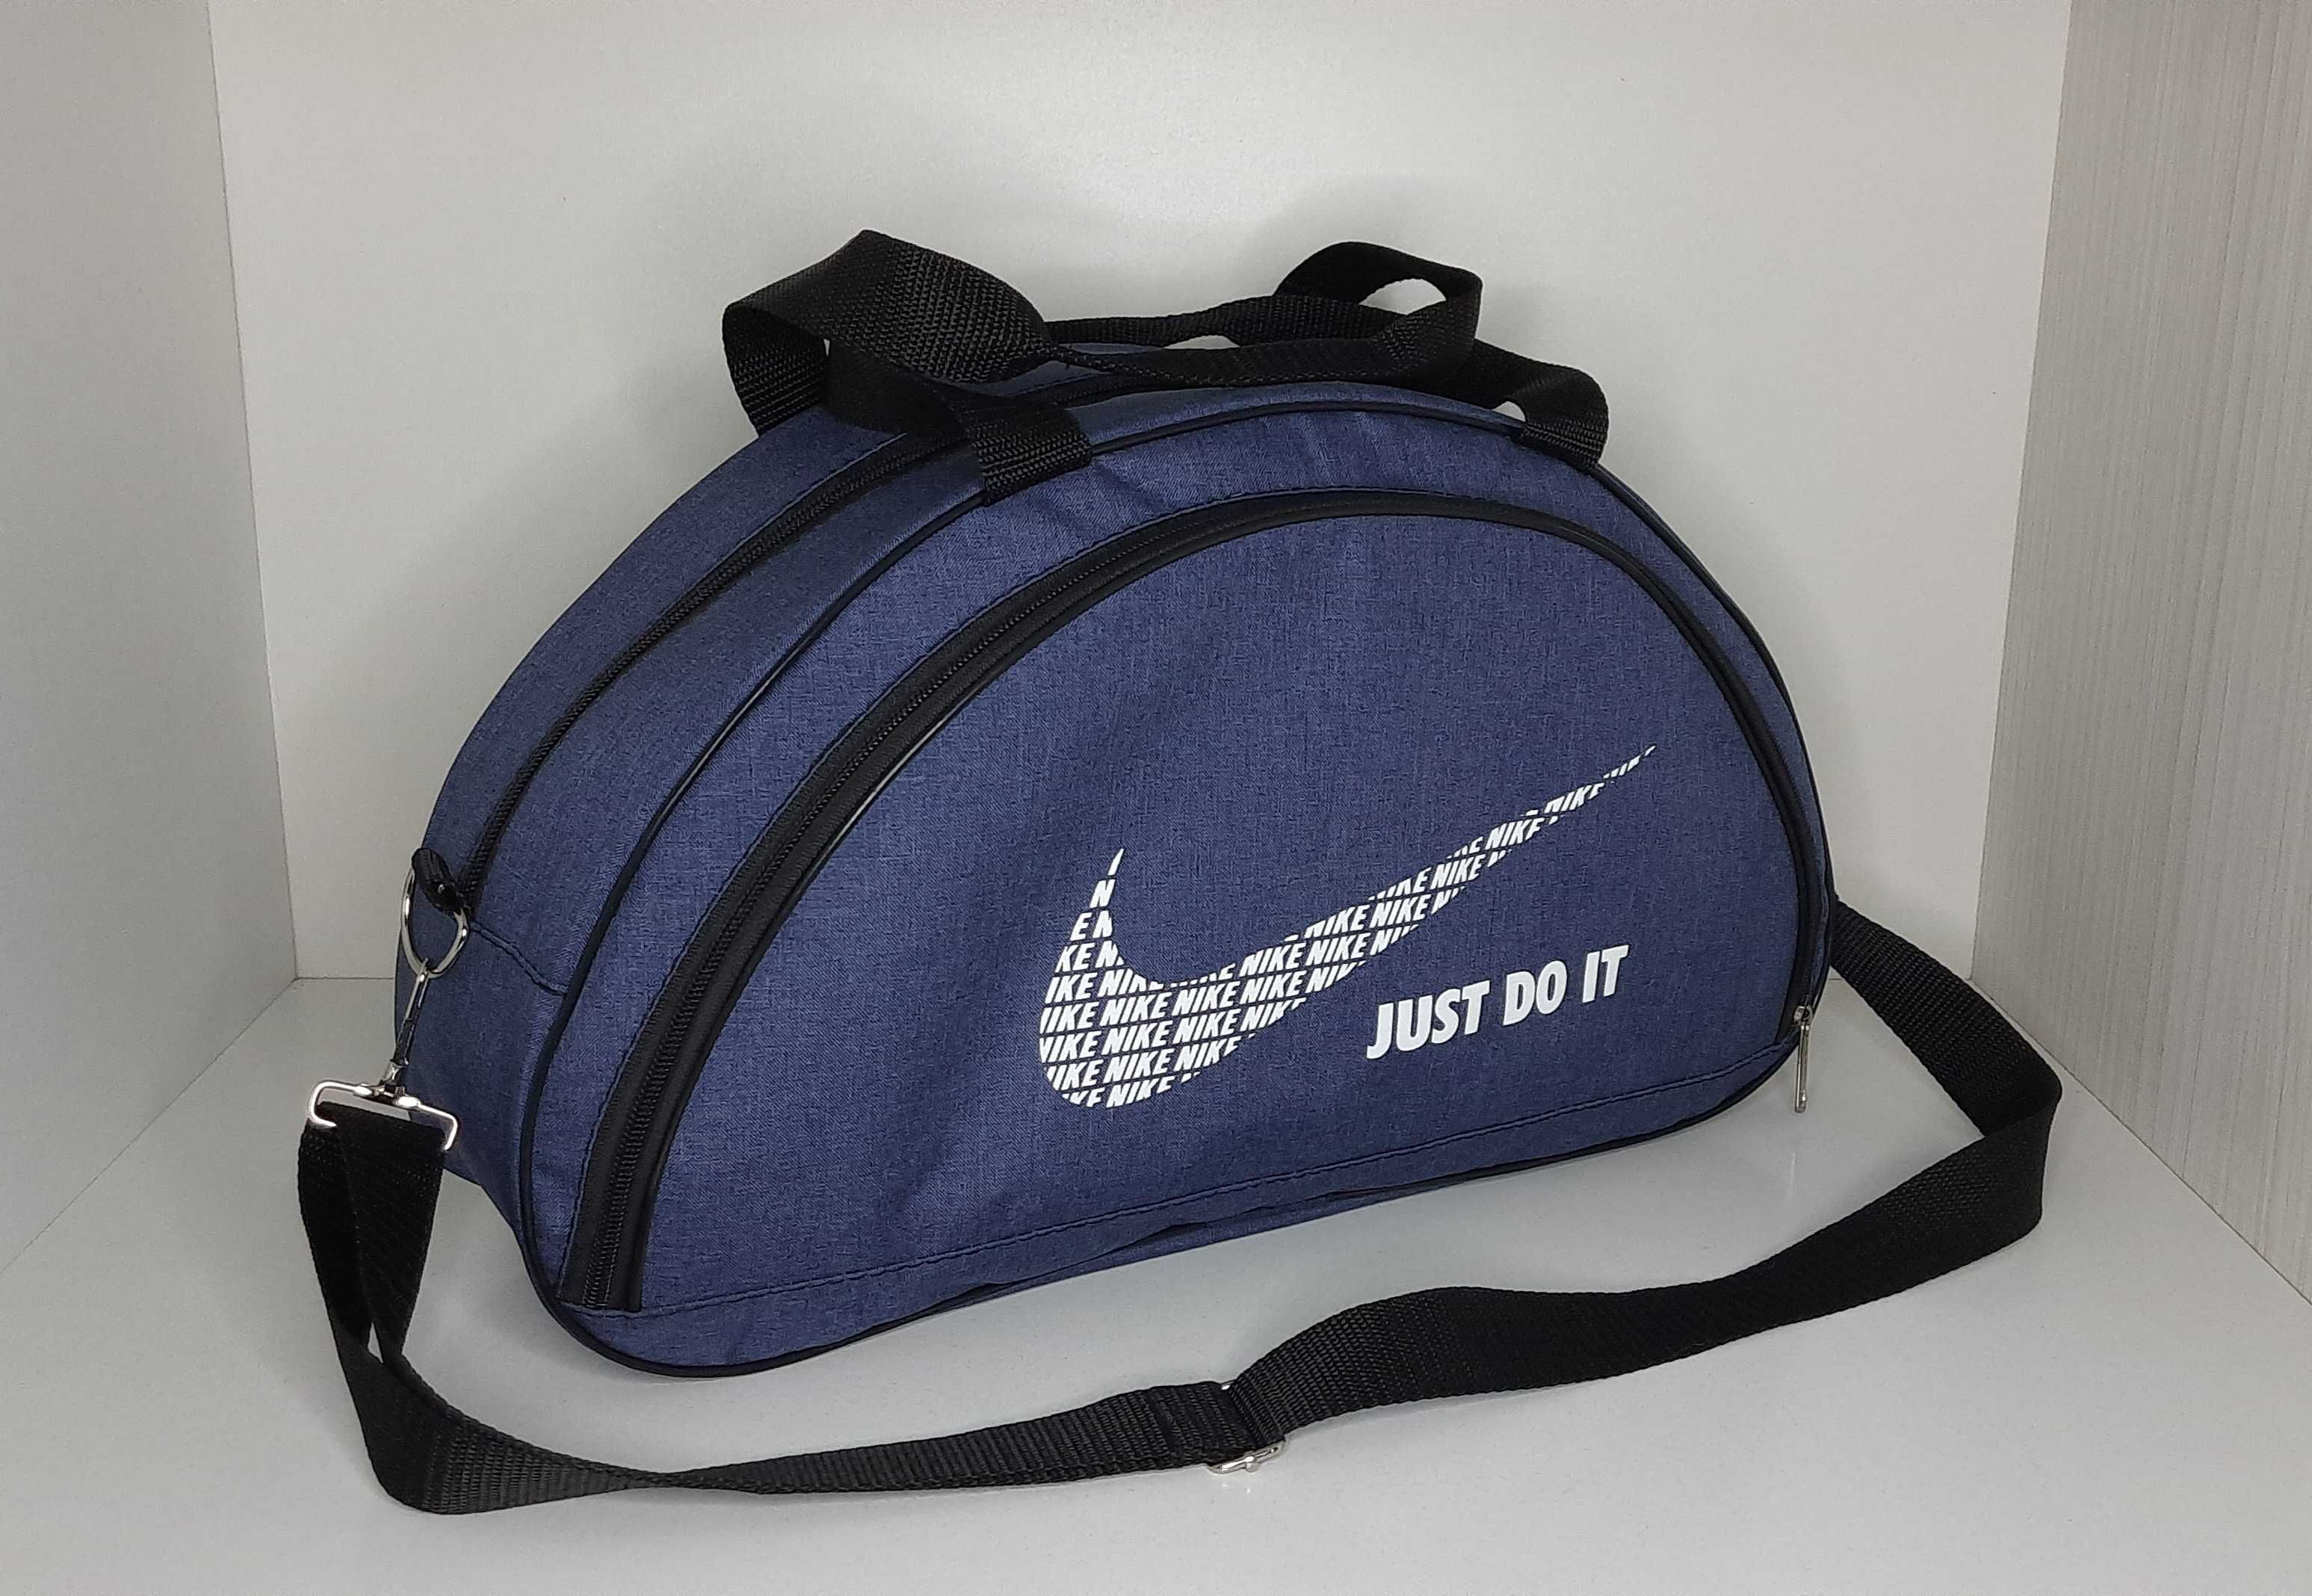 Спортивная сумка Nike Just do it. Новая.